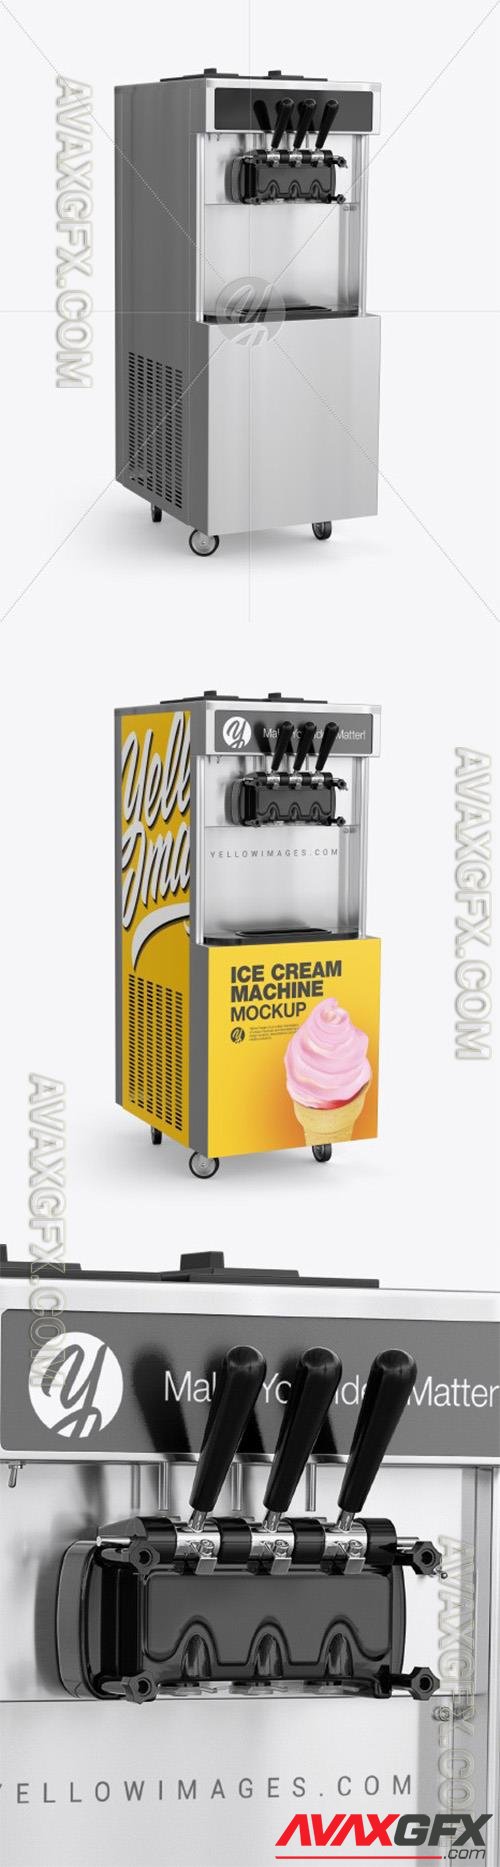 Ice Cream Machine Mockup - Half Side View 36124 TIF